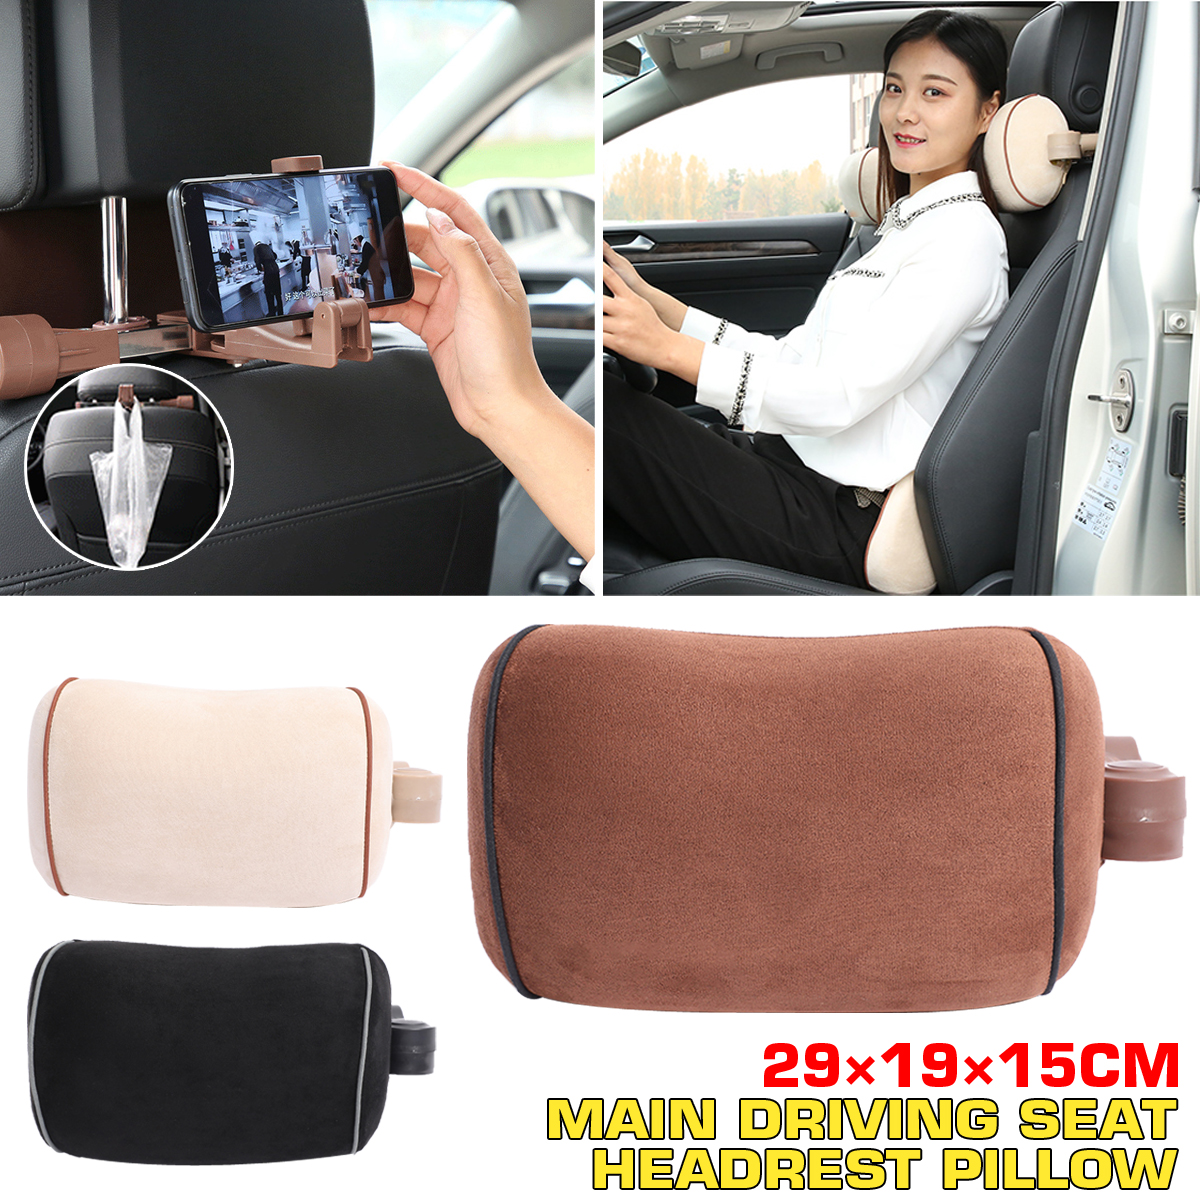 Multifunctional-Foldable-Travel-Car-Main-Driving-Seat-Memory-Foam-U-Shaped-Headrest-Pillow-with-Car--1670040-2